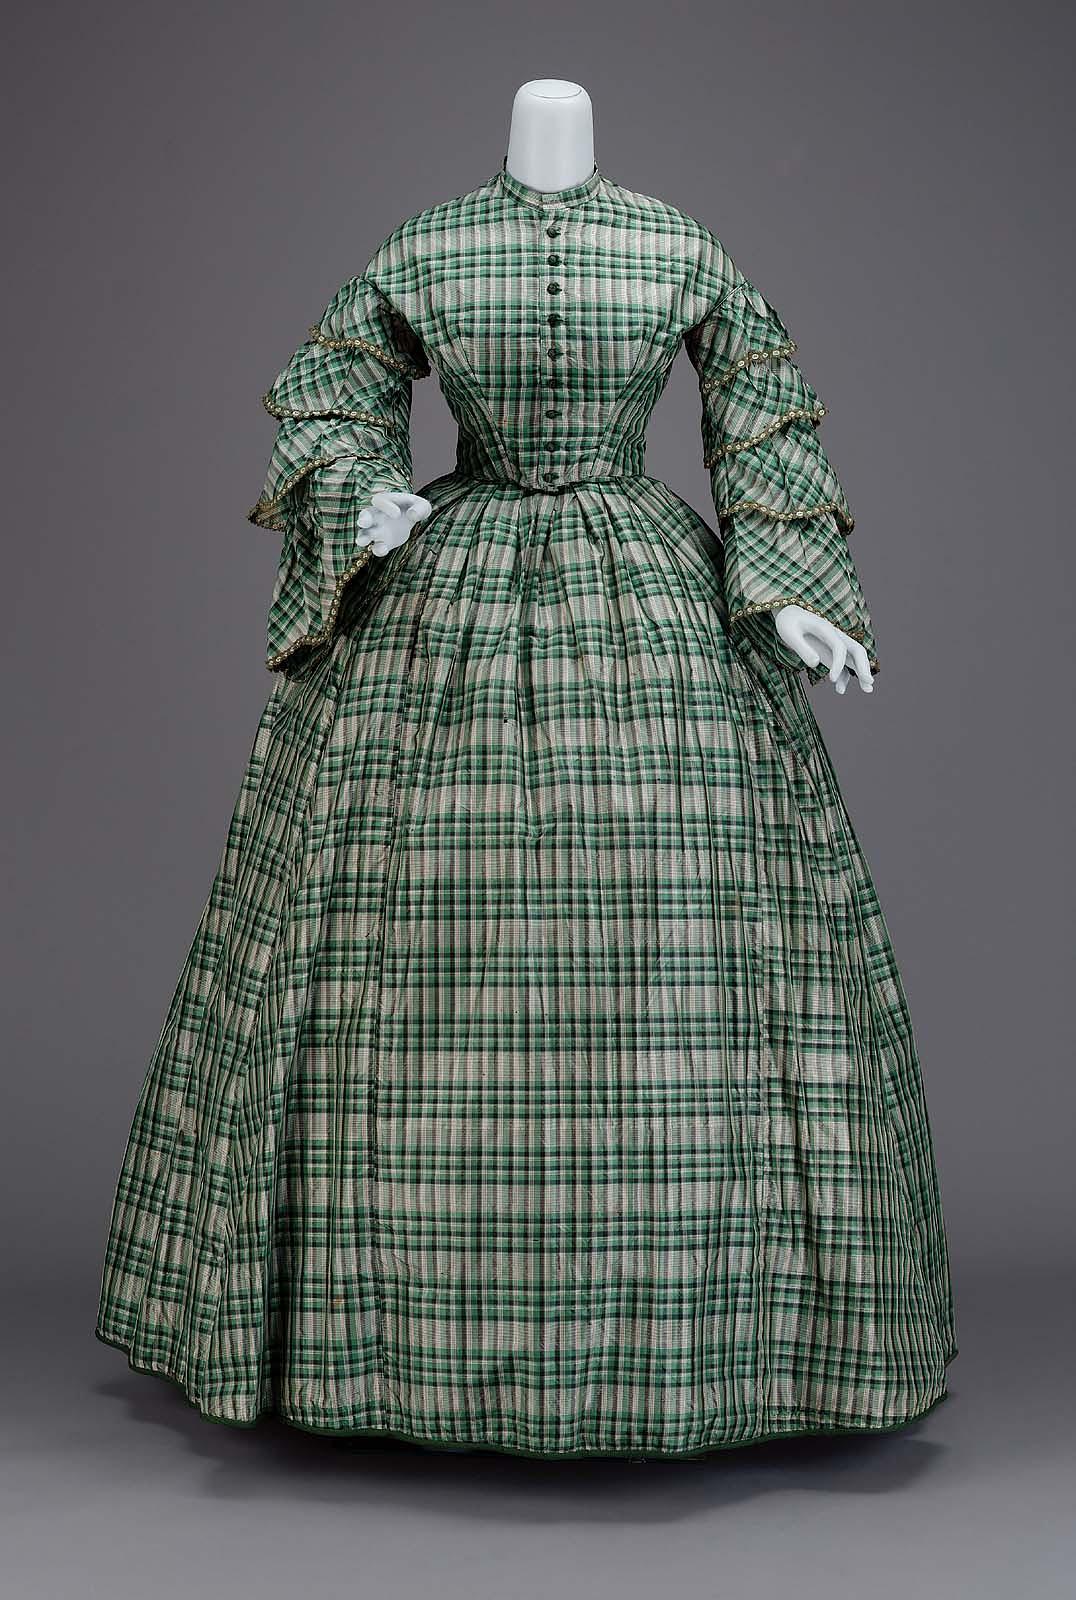 Dress, American, mid-19th century, Silk taffeta, cotton twill lining, plush velvet buttons, silk ribbon trim, whalebone, Gift of Miss Eleanor E. Barry, MFA Boston, 53.2222a-b